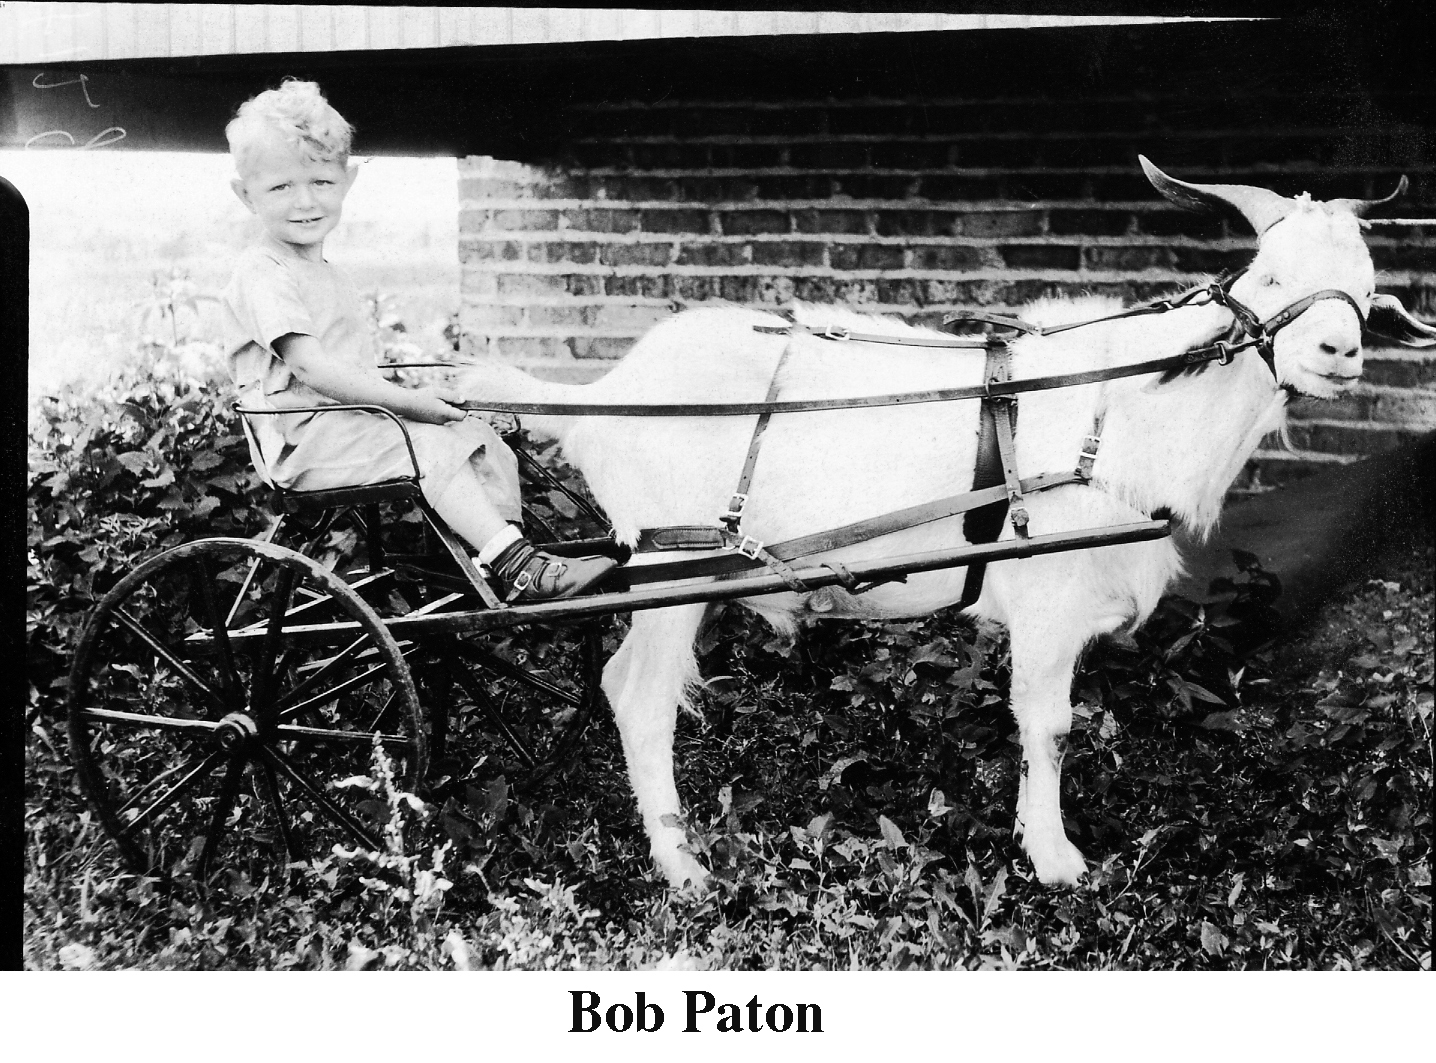 Bob Paton riding in a goat cart